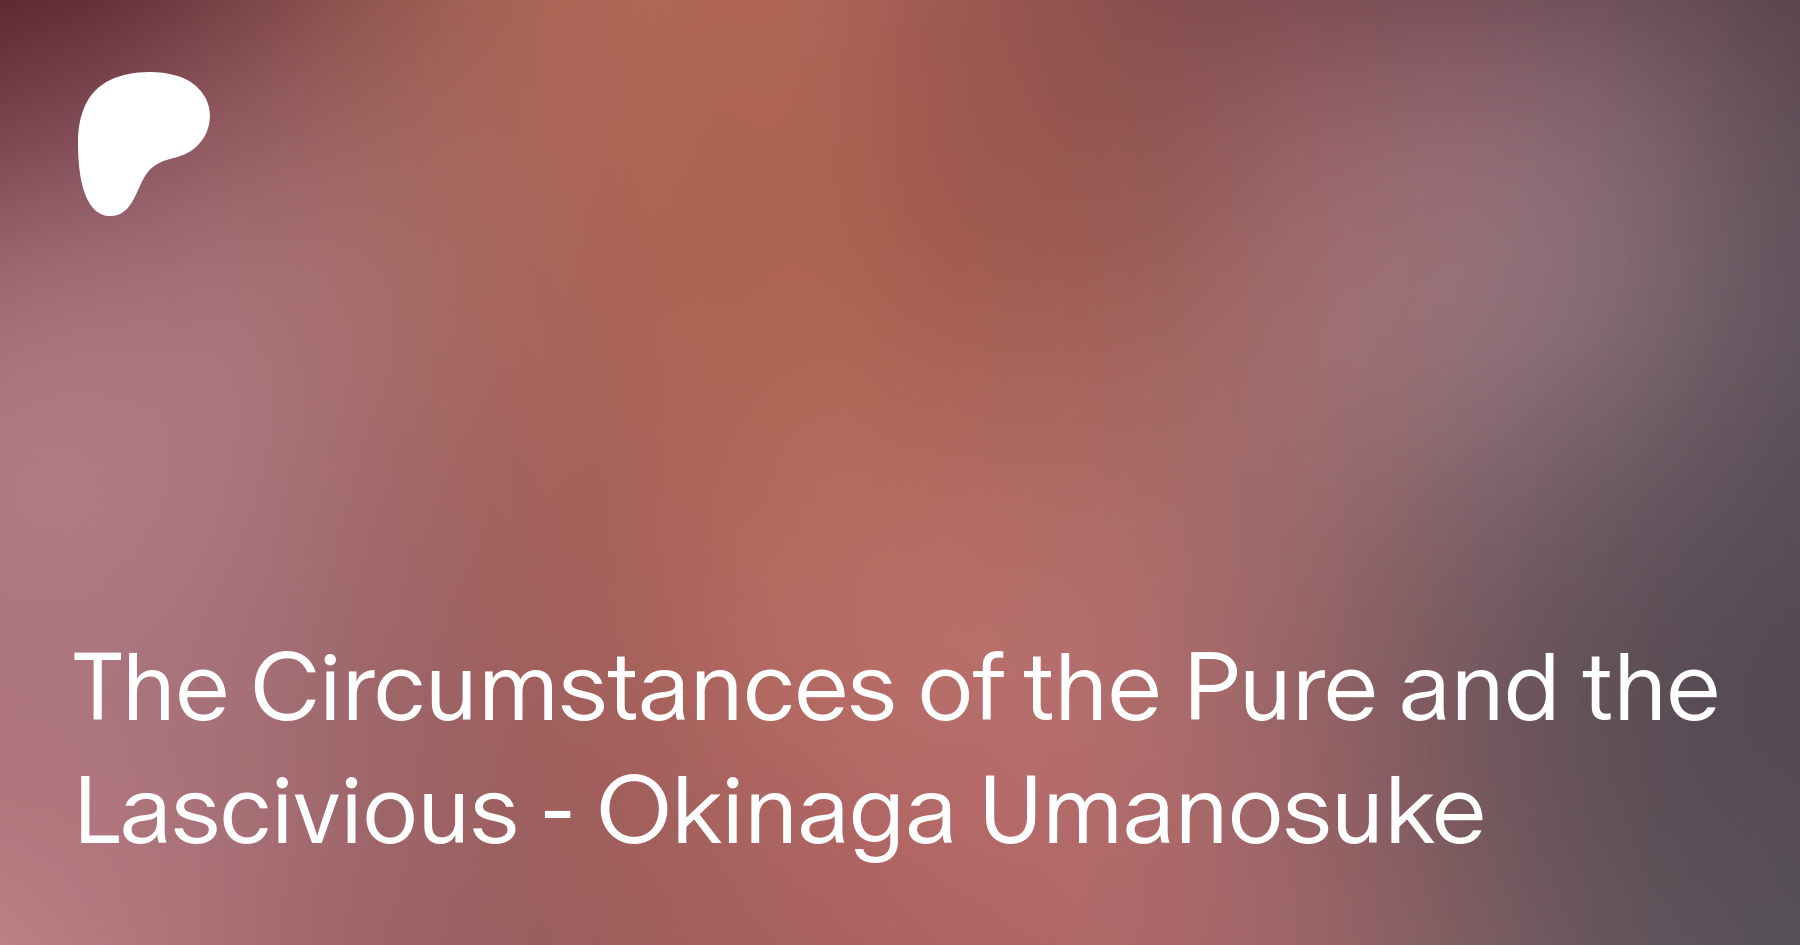 The circumstances of the pure and the lascivious [okinaga umanosuke]